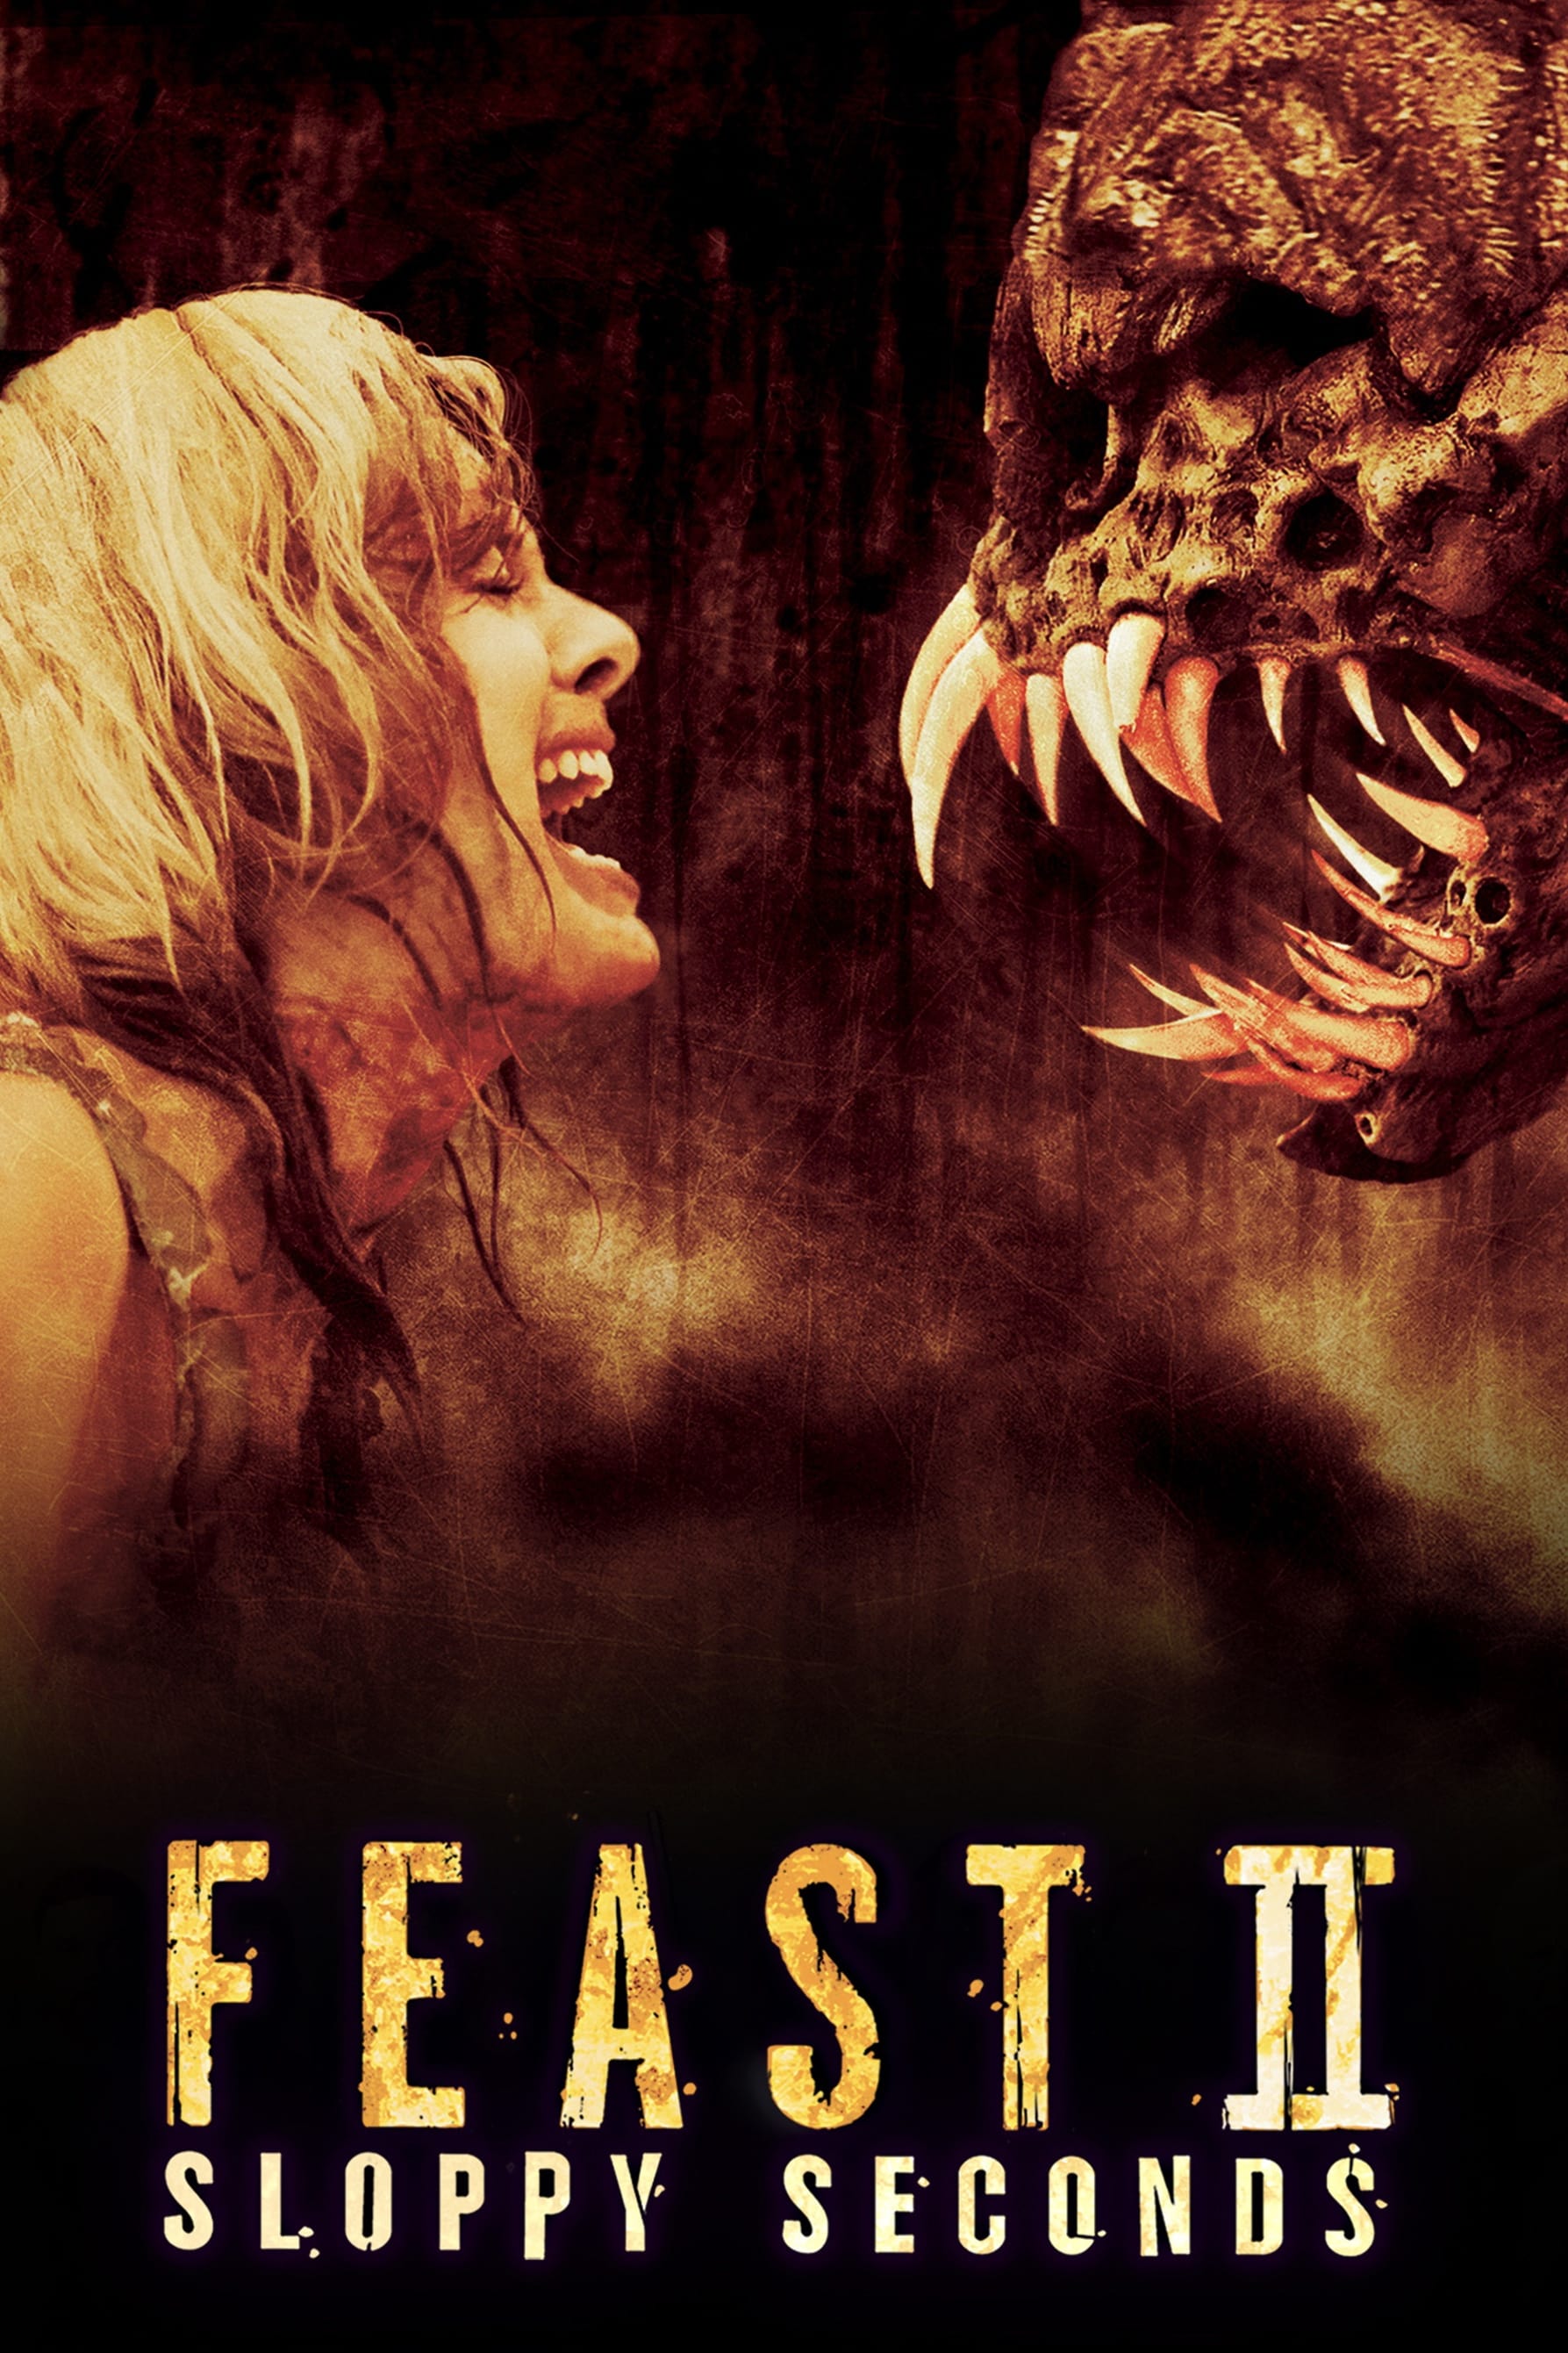 Feast 2: No Limit (2008)